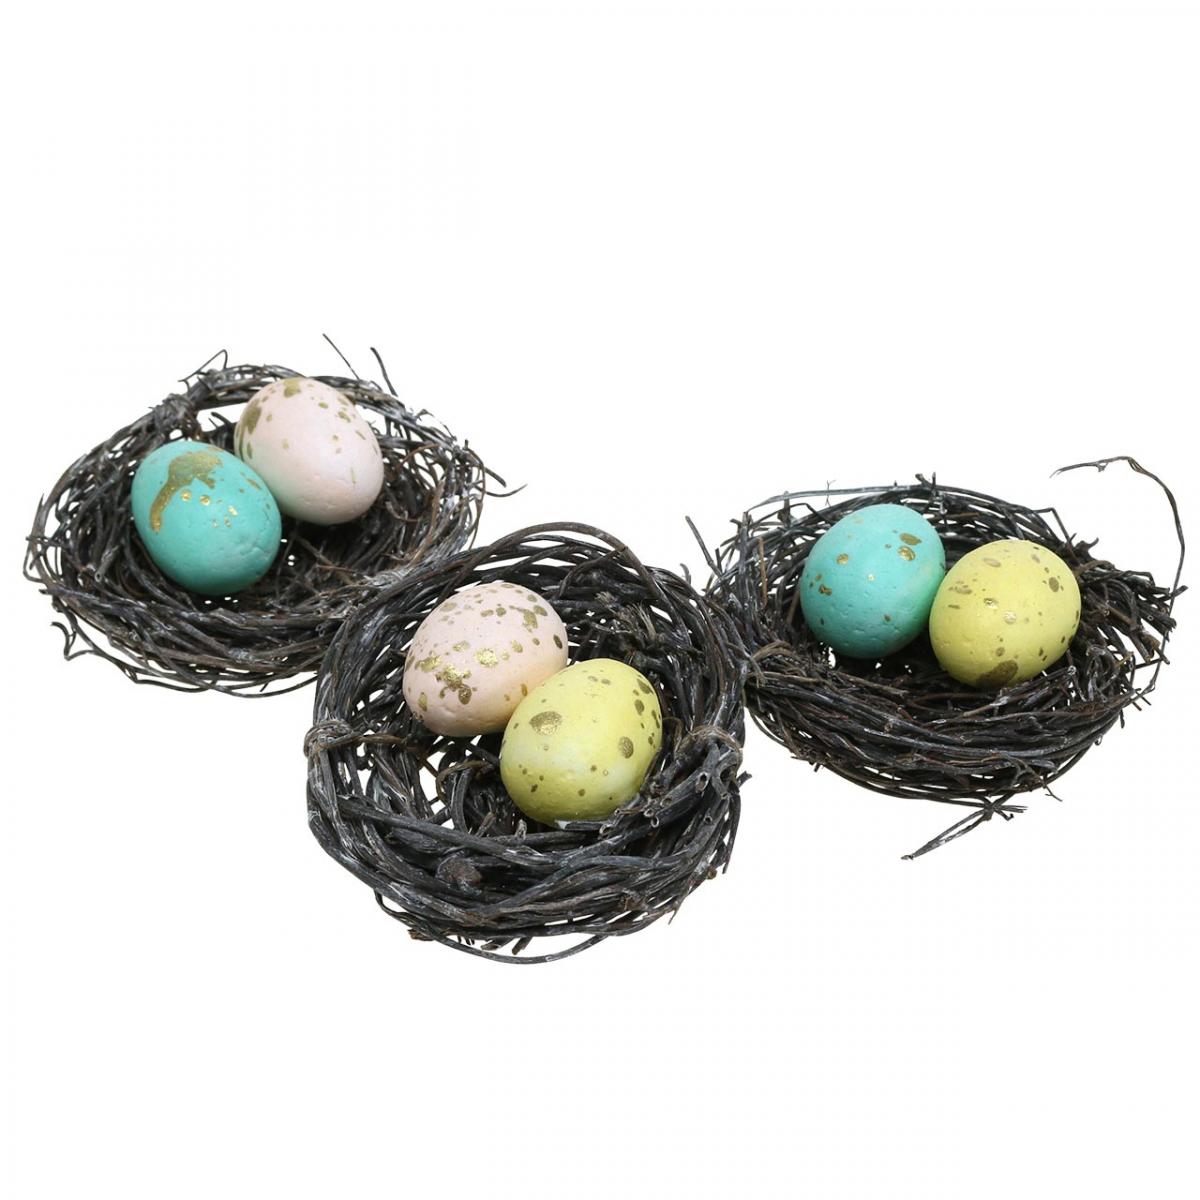 pulcini pasquali cesto uova colorate cartolina d'epoca Pasqua Ostern